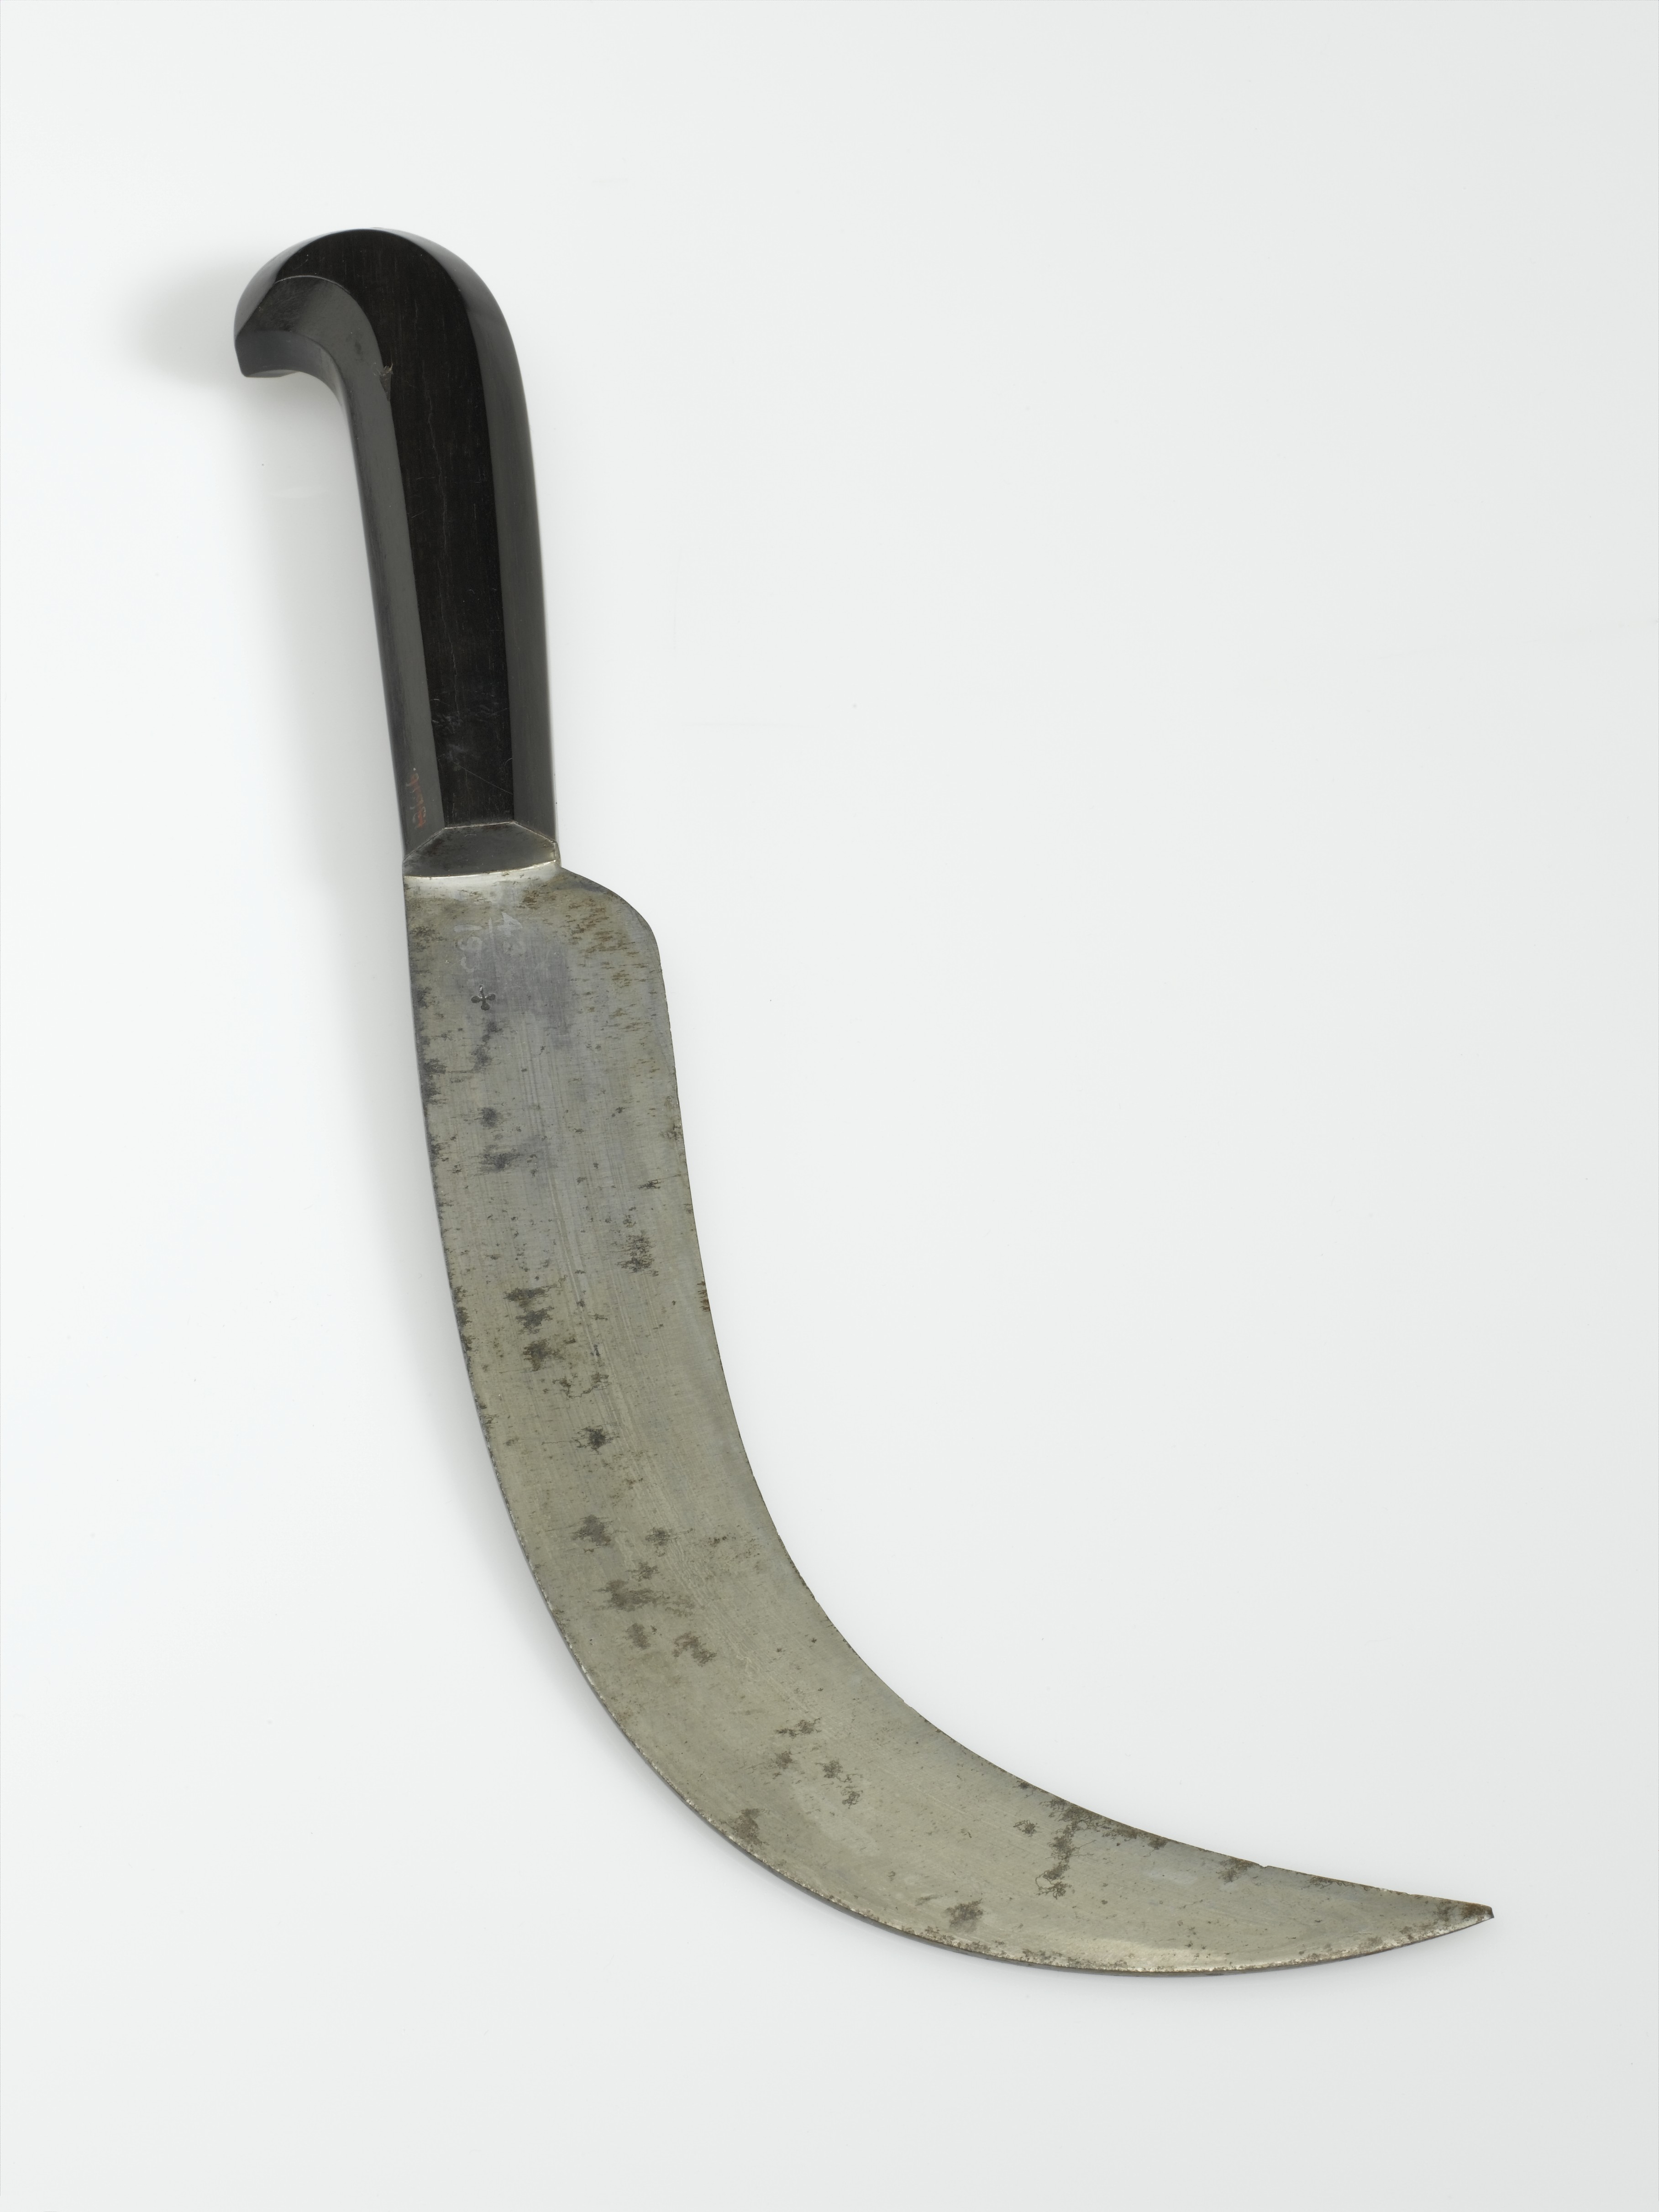 File:Amputation knife, Paris, France, 1701-1800 Wellcome L0058146.jpg -  Wikimedia Commons